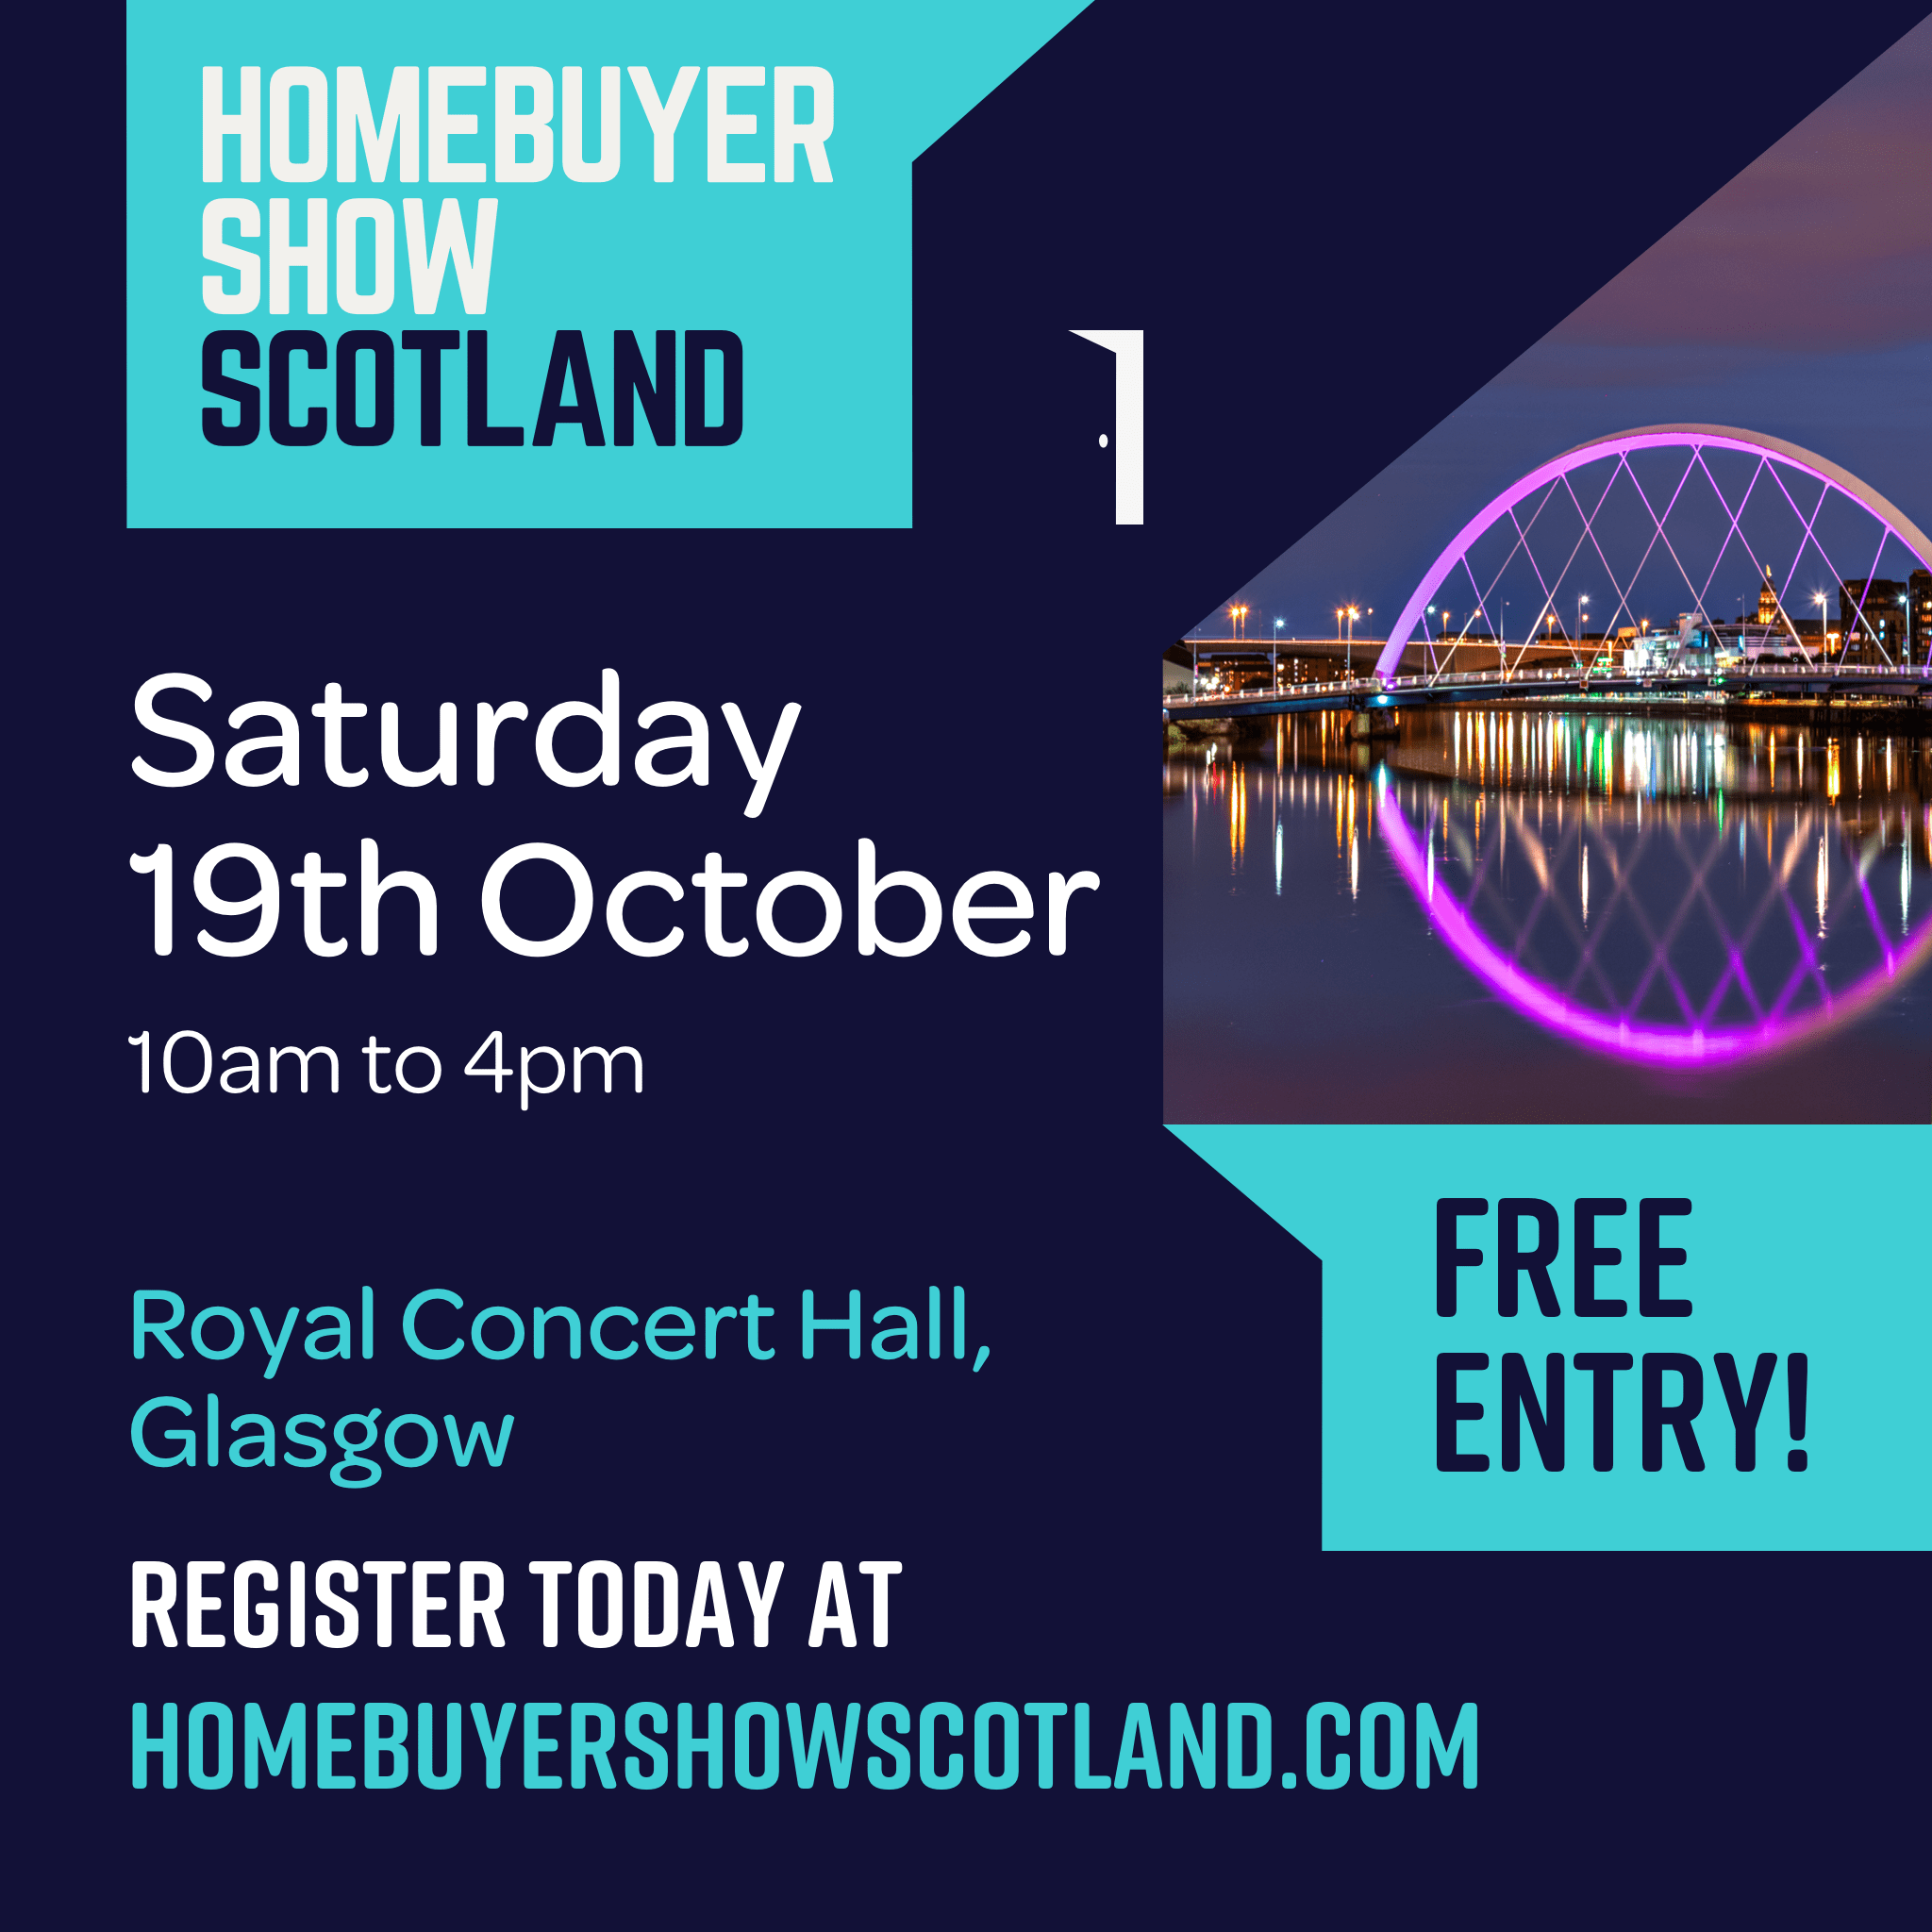 Glasgow to host first Homebuyer Show Scotland